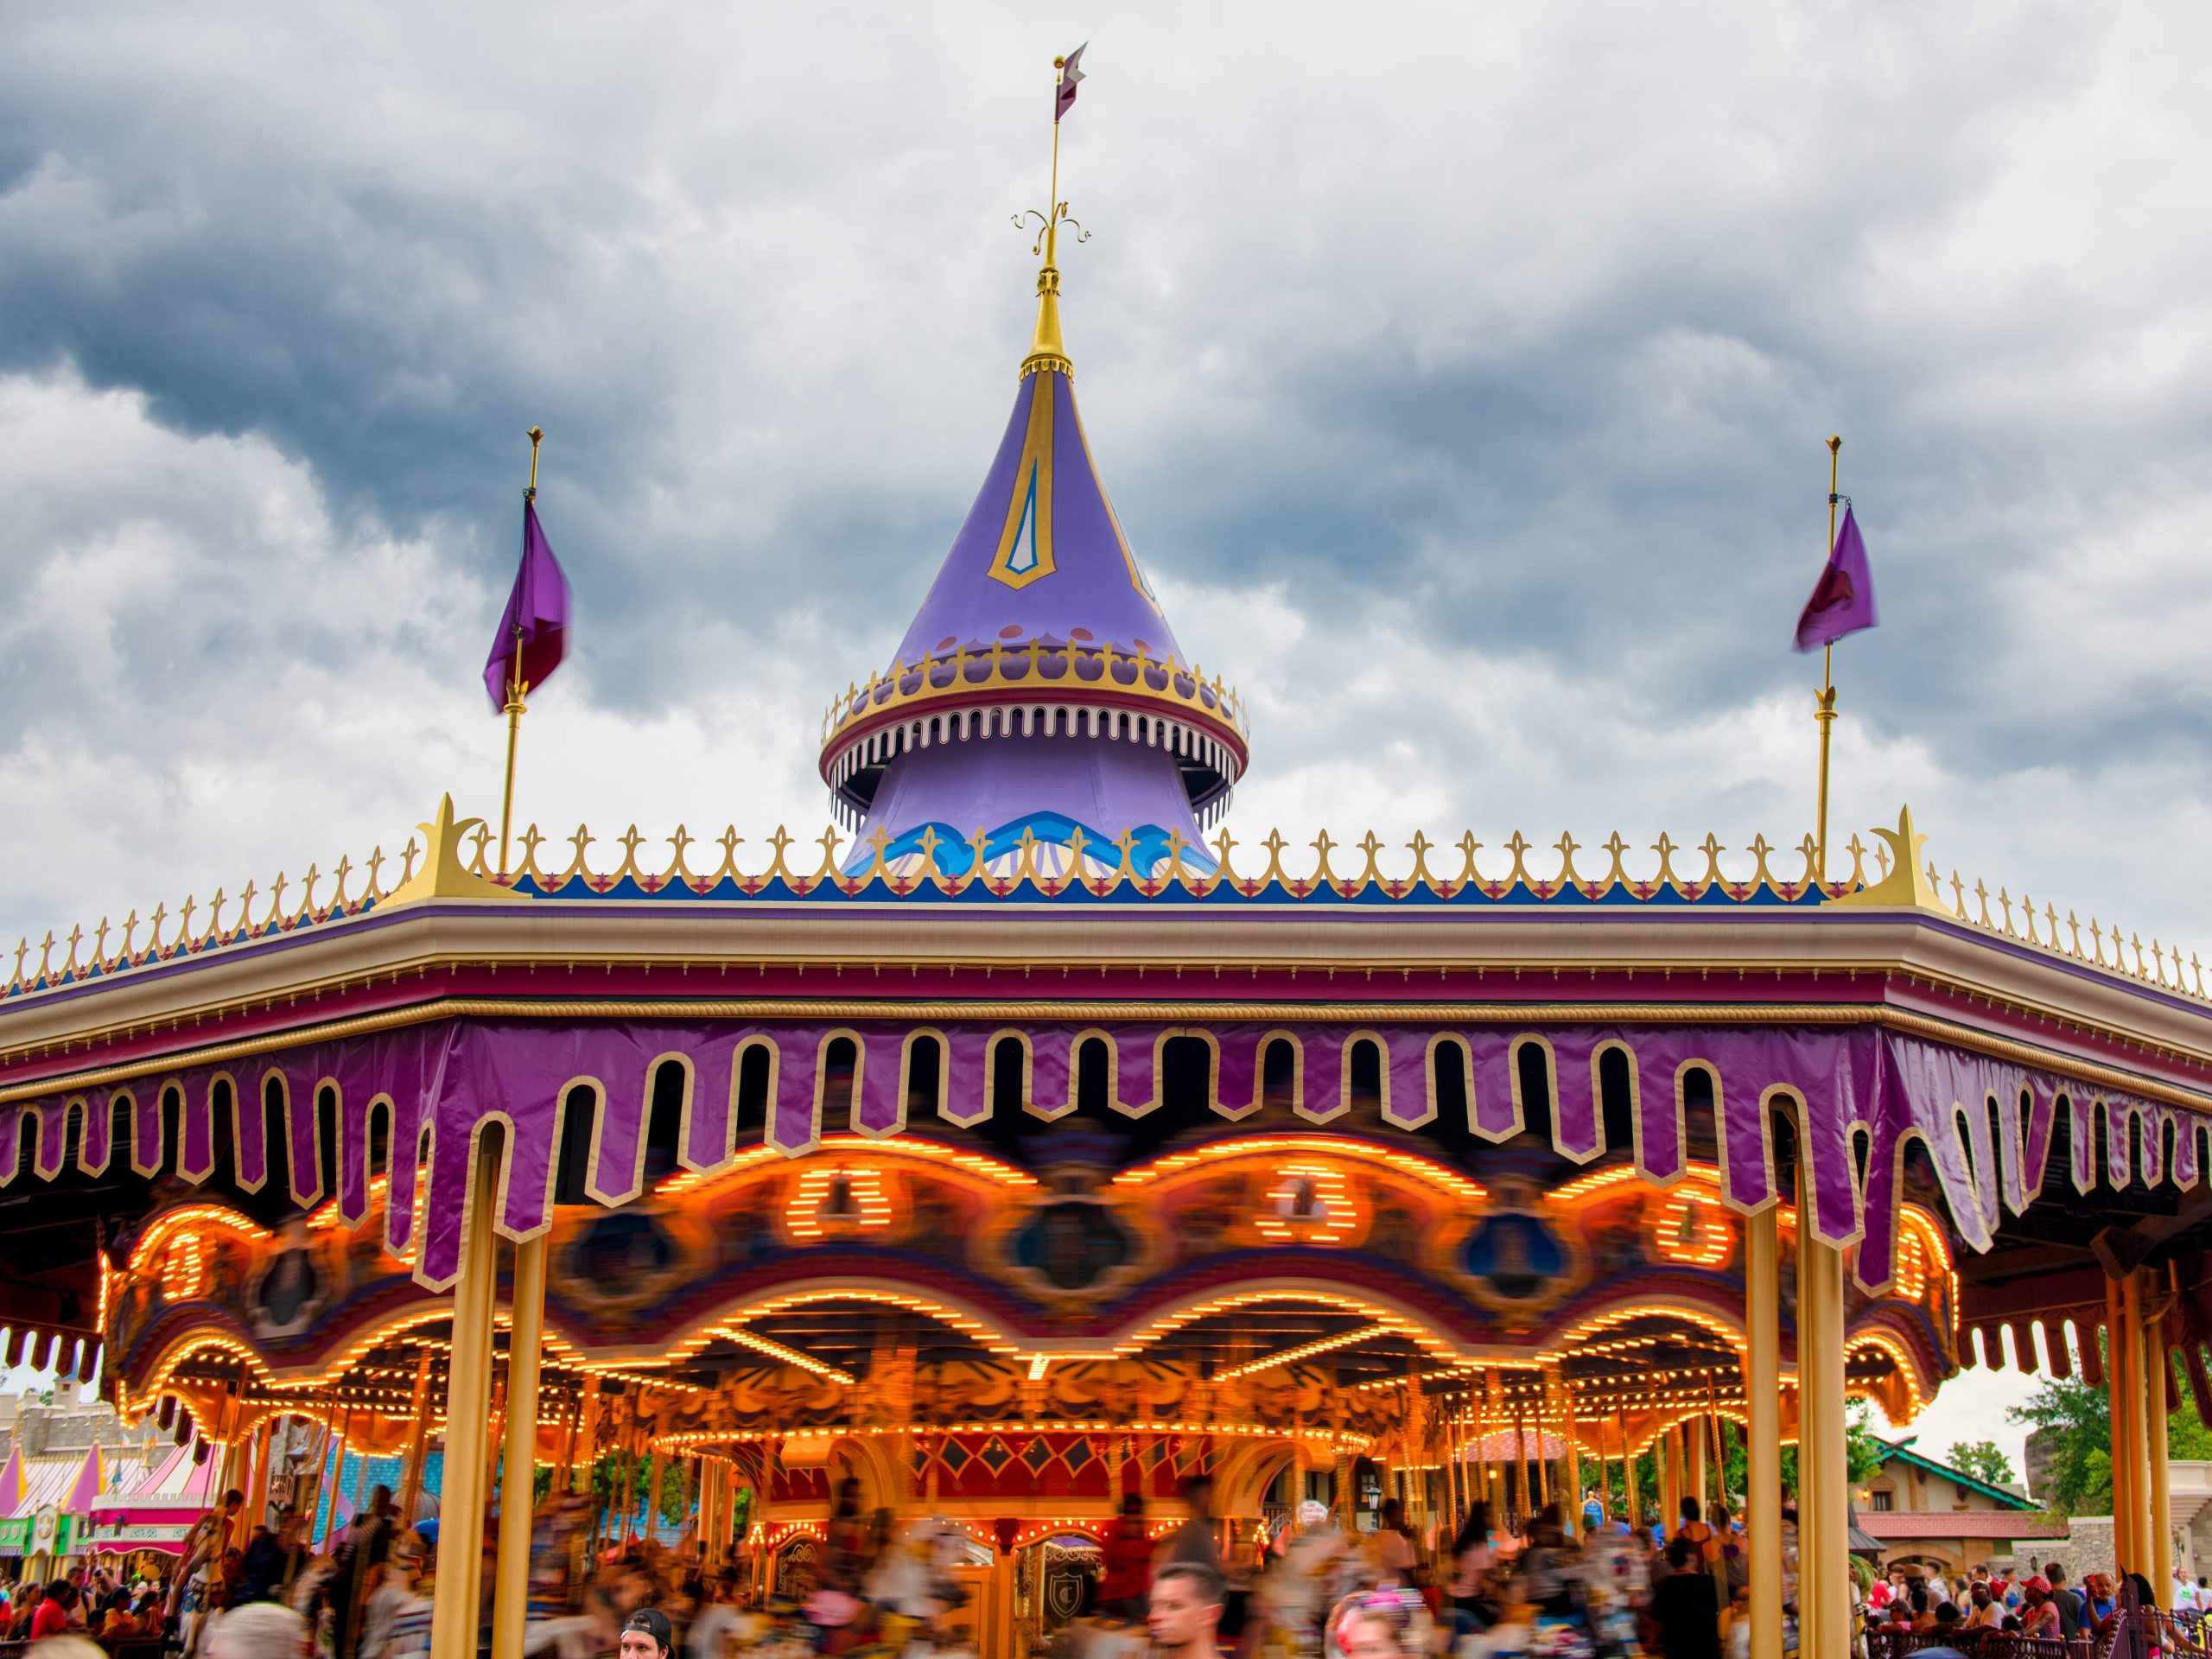 the carousel at Walt Disney World's Magic Kingdom amusement park.